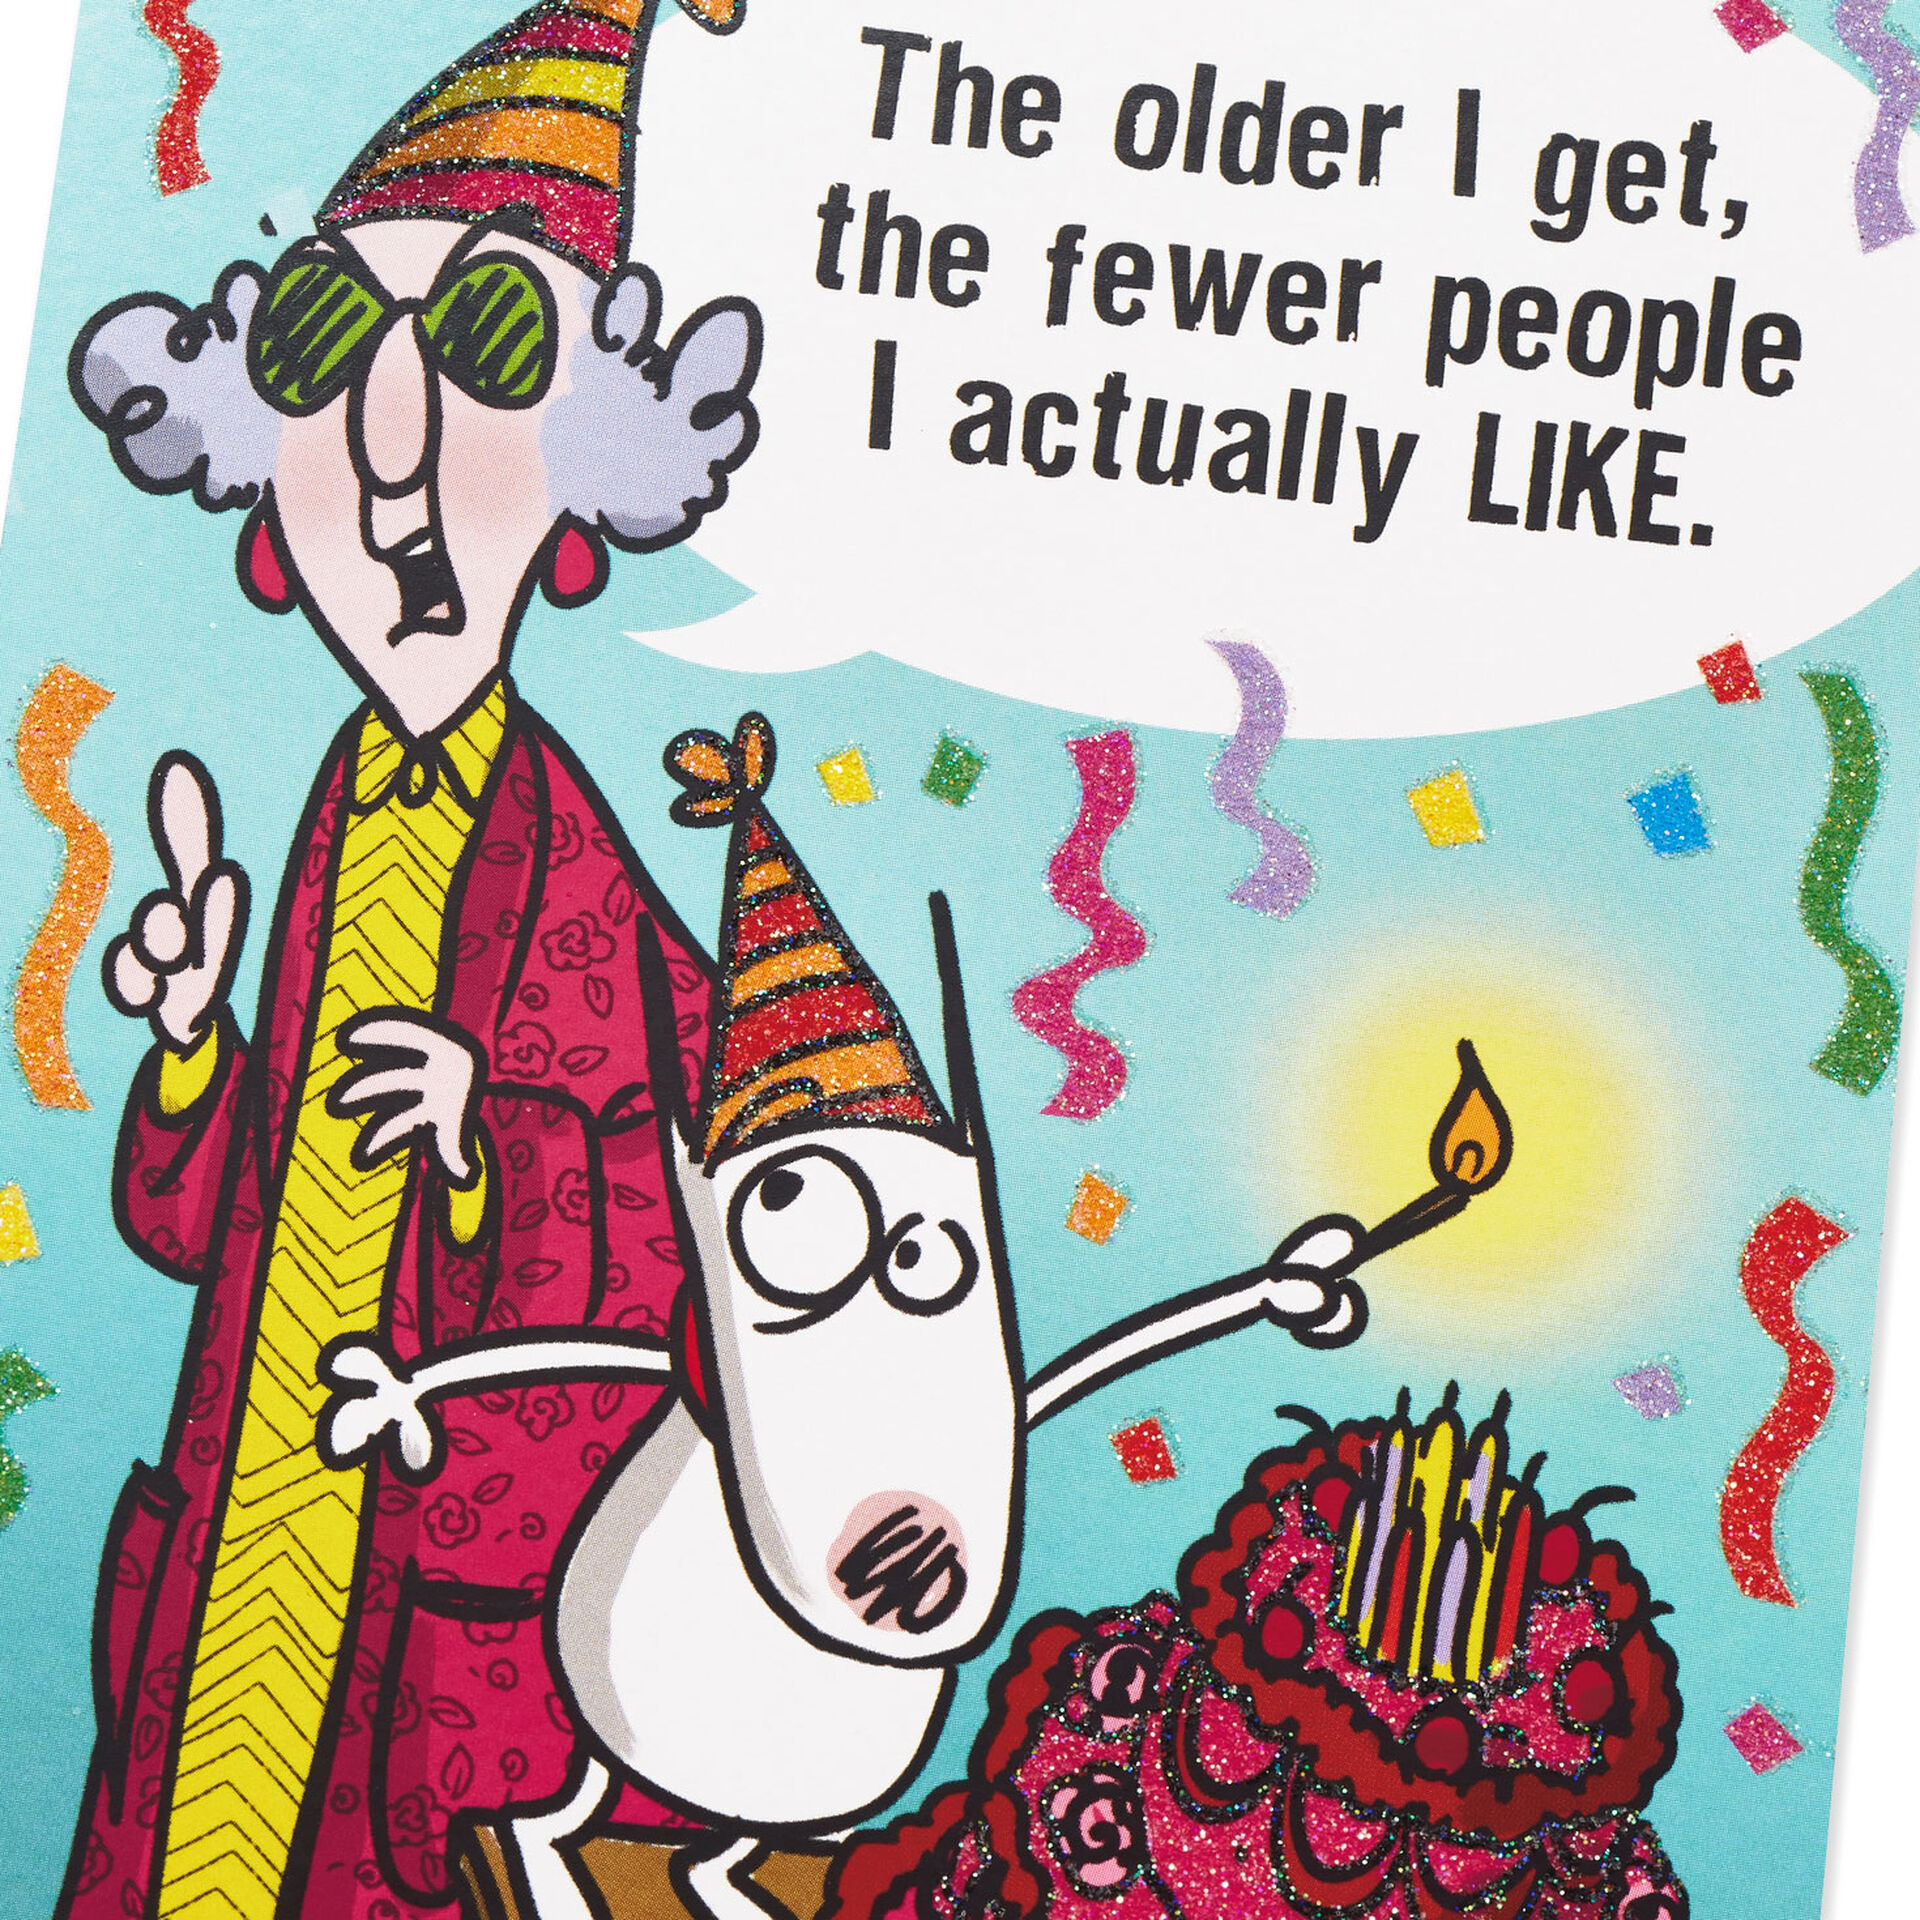 maxine-you-make-the-cut-funny-birthday-card-greeting-cards-hallmark